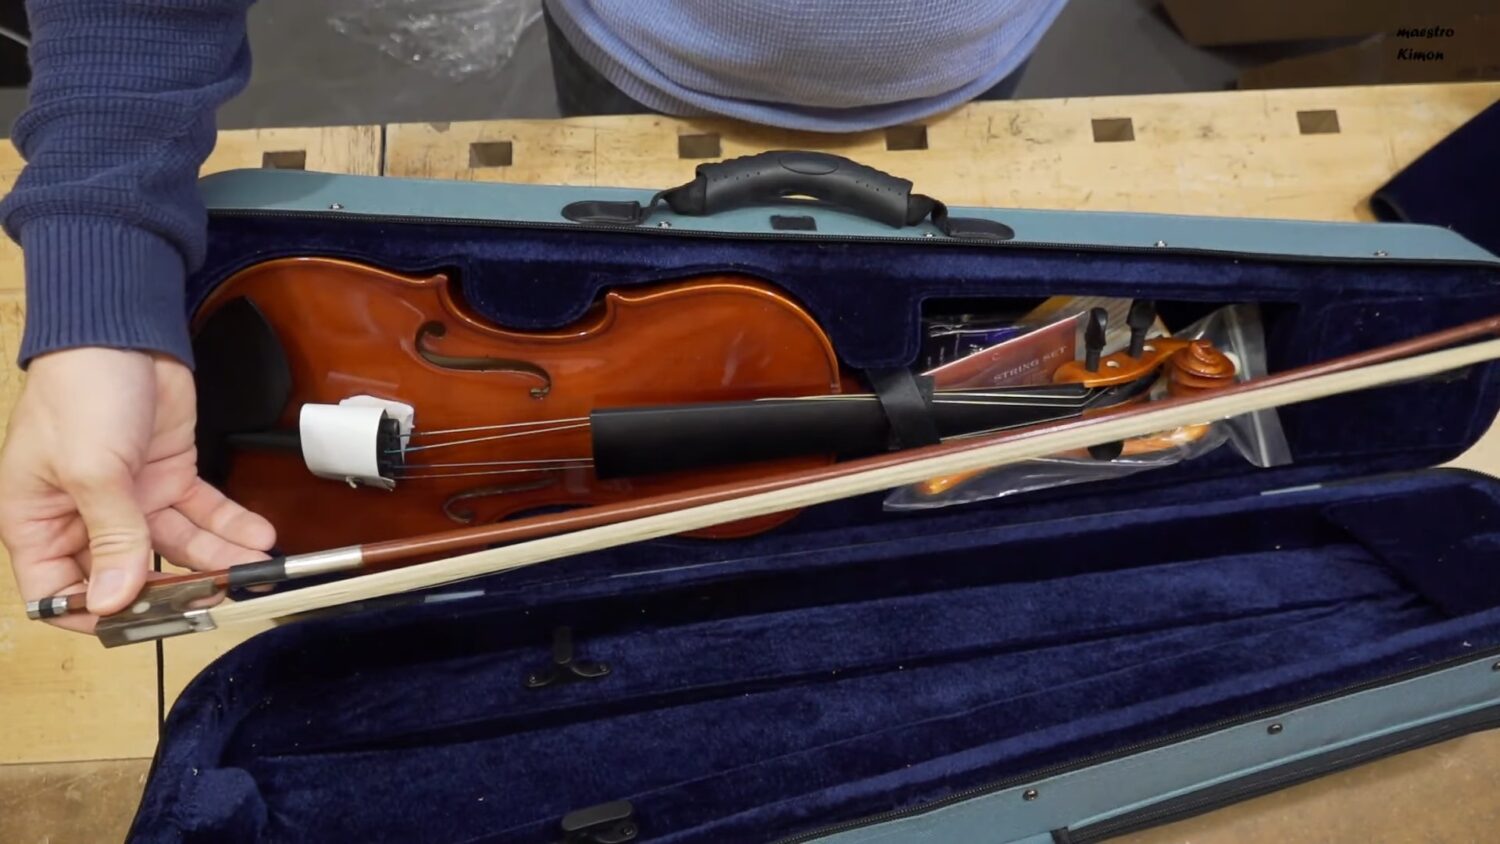 Violin set under $100,- Eastar EVA-1 unboxing and review